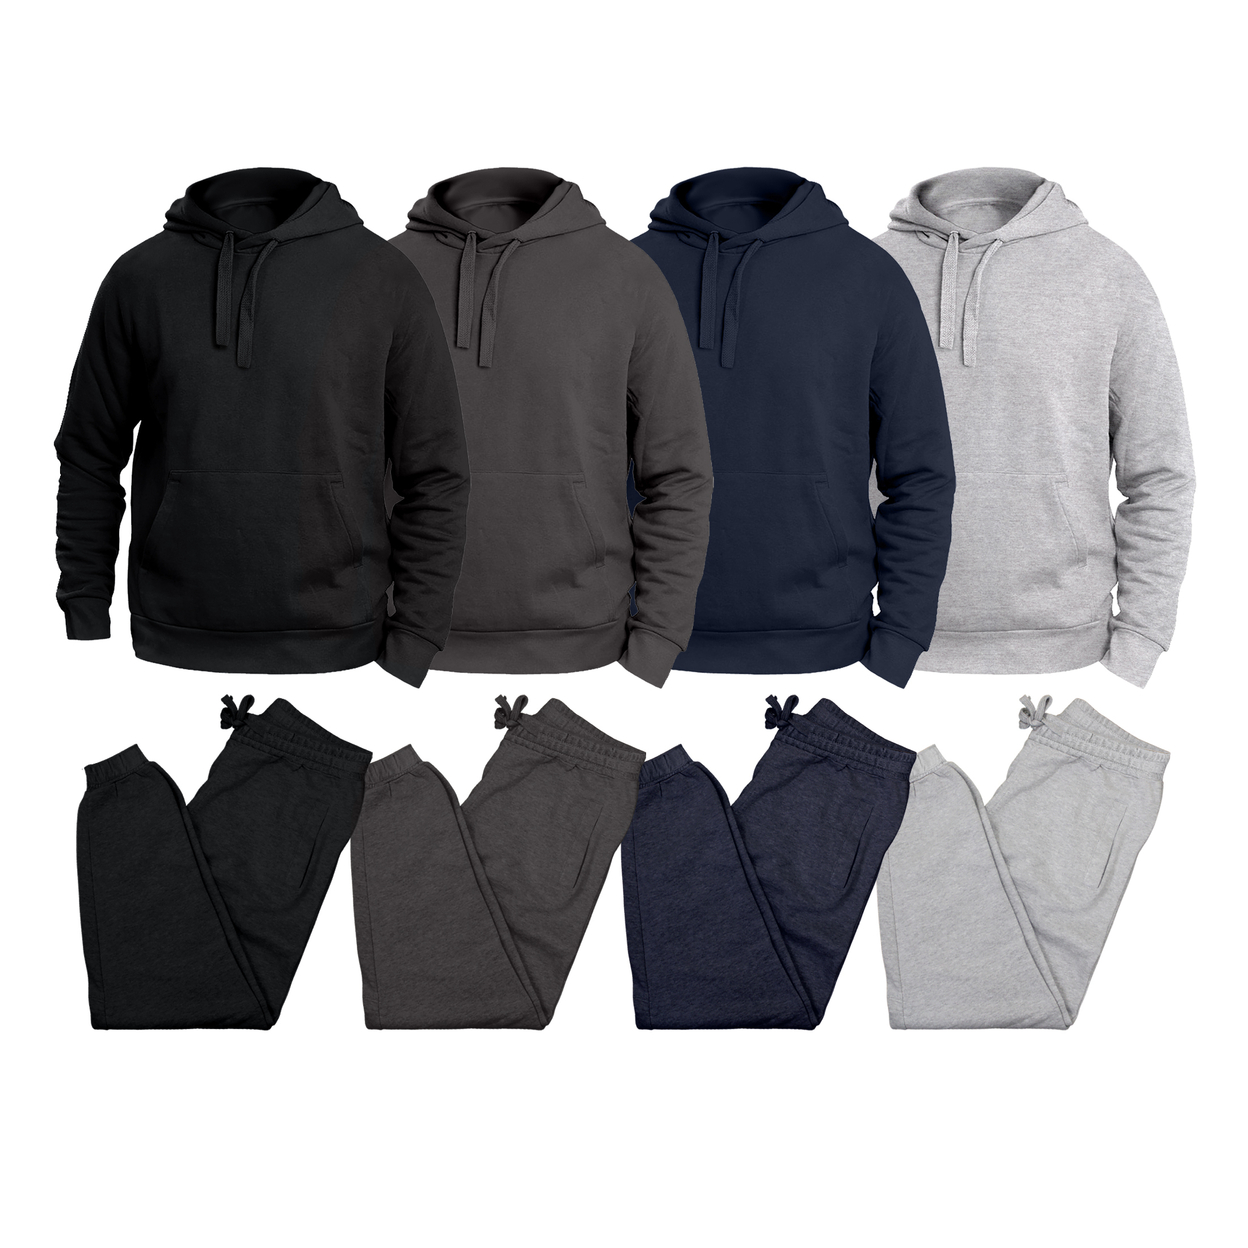 Multi-Pack: Big & Tall Men's Winter Warm Cozy Athletic Fleece Lined Multi-Pocket Cargo Sweatsuit - Black, 2-pack, Large